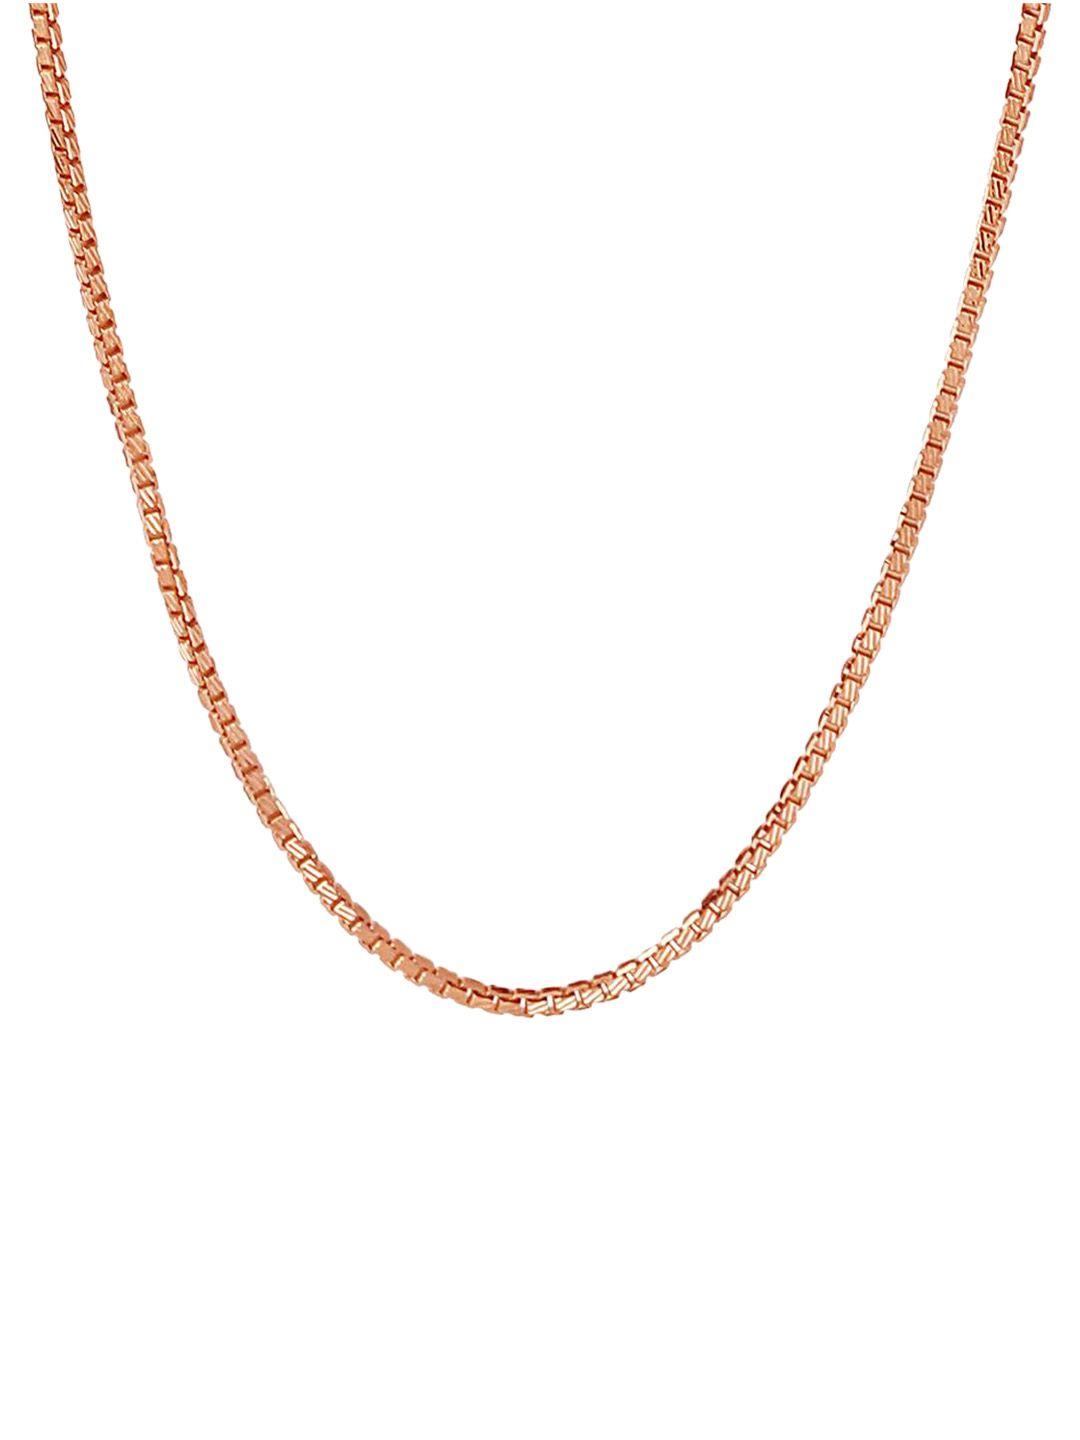 candere a kalyan jewellers company 18kt bis hallmark rose gold chain-3.12gm